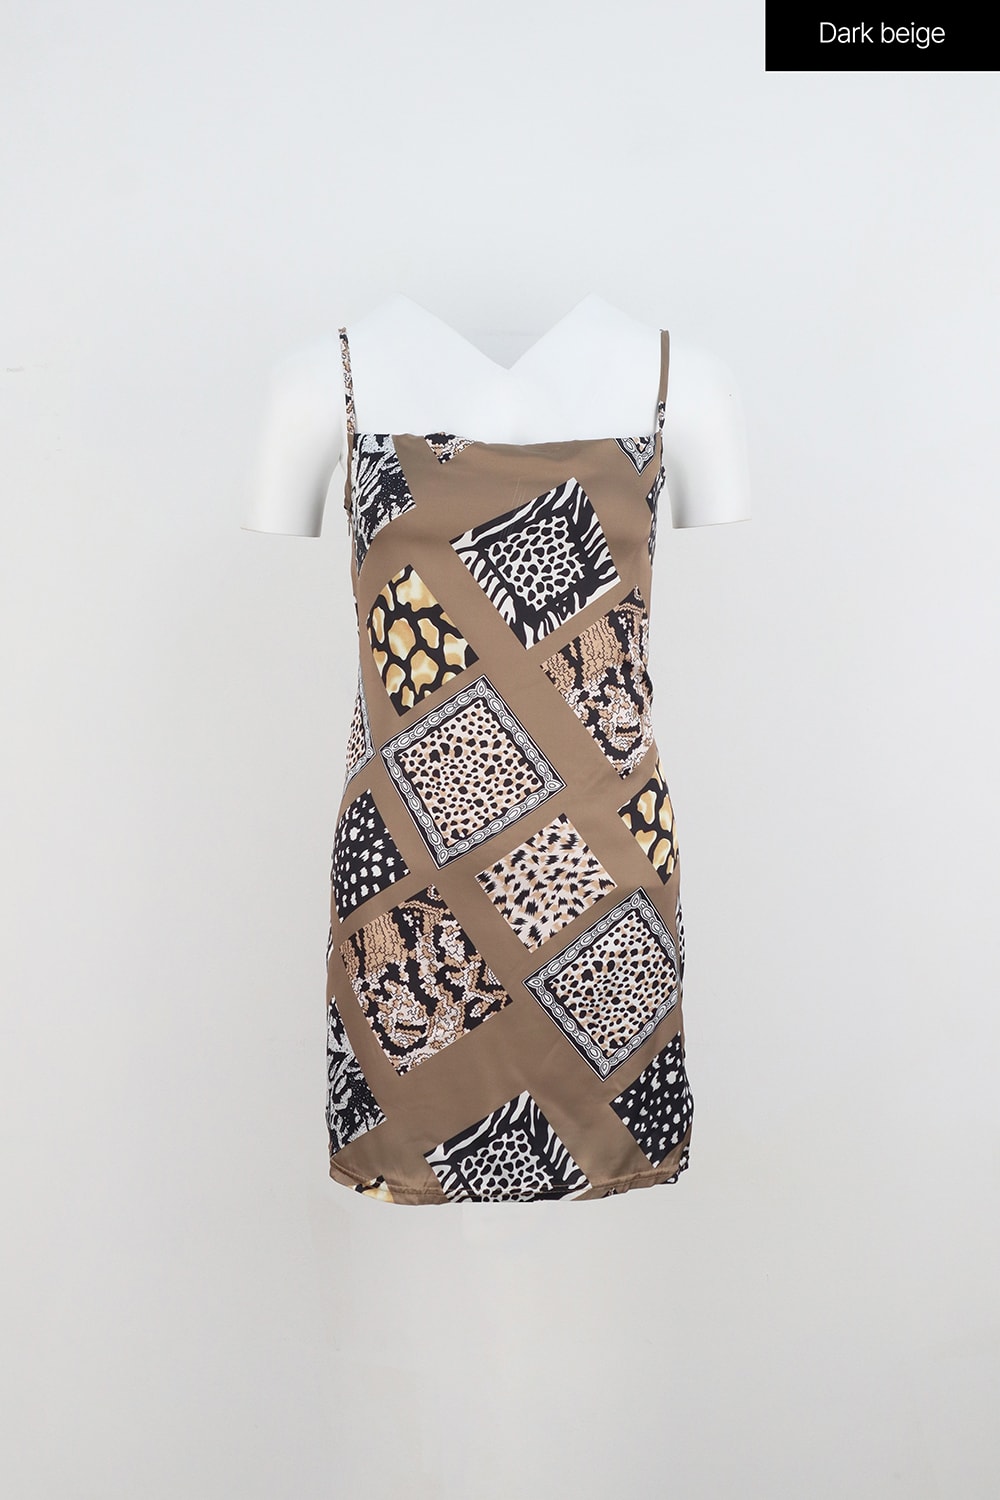 pattern-strap-mini-dress-iy331